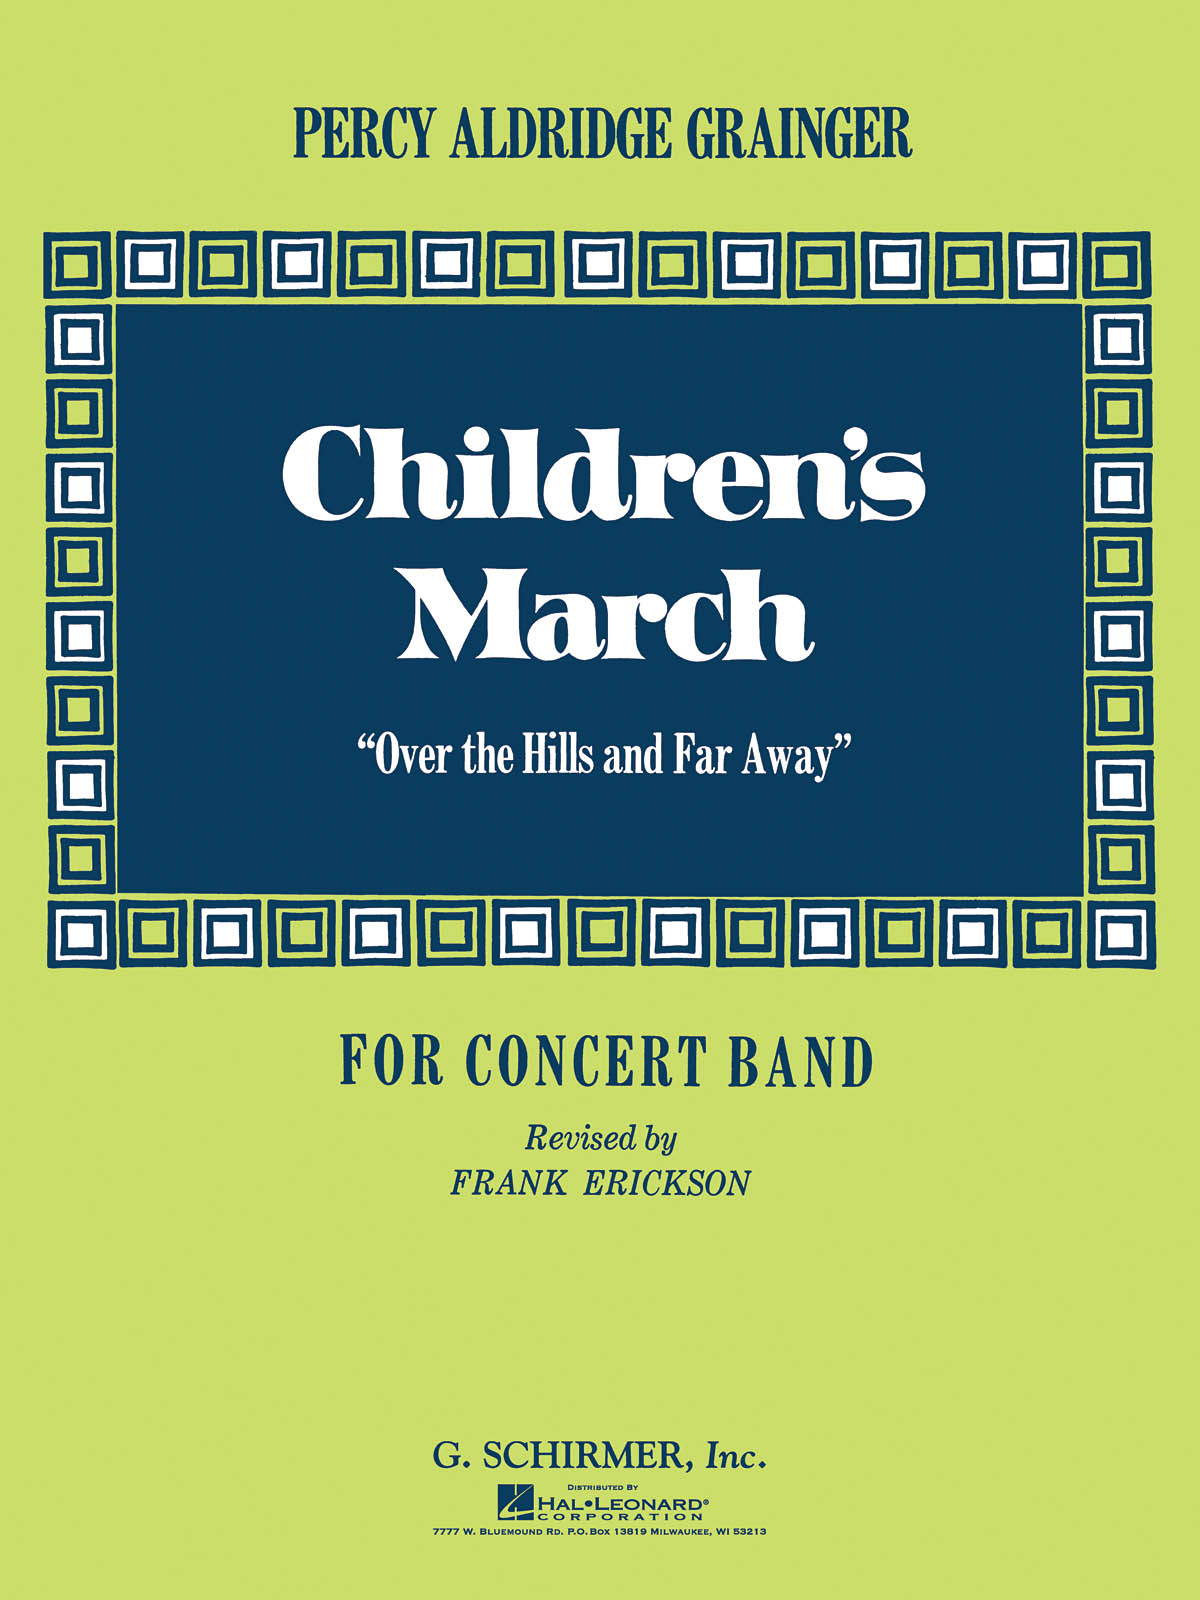 Percy Aldridge Grainger: Children's March (Over the Hills and Far Away): Concert